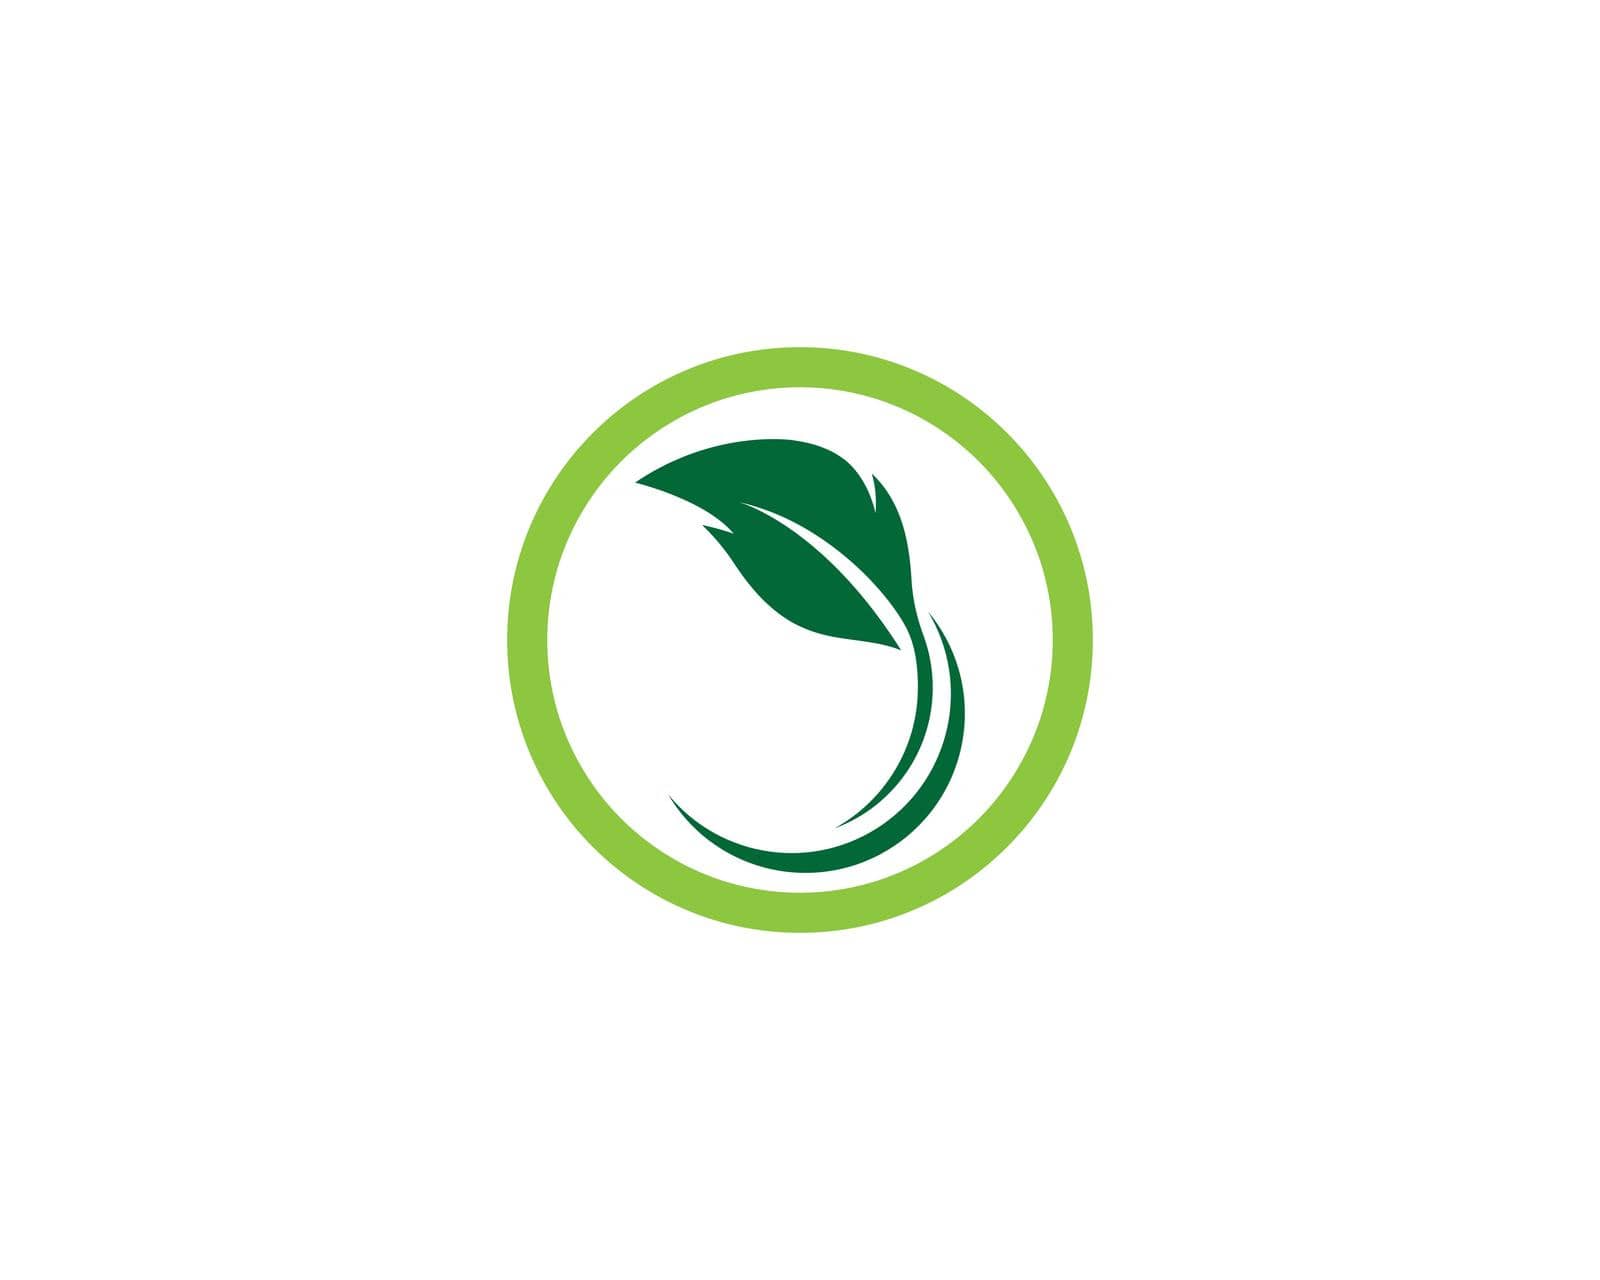 Leaf symbol vector icon by Fat17